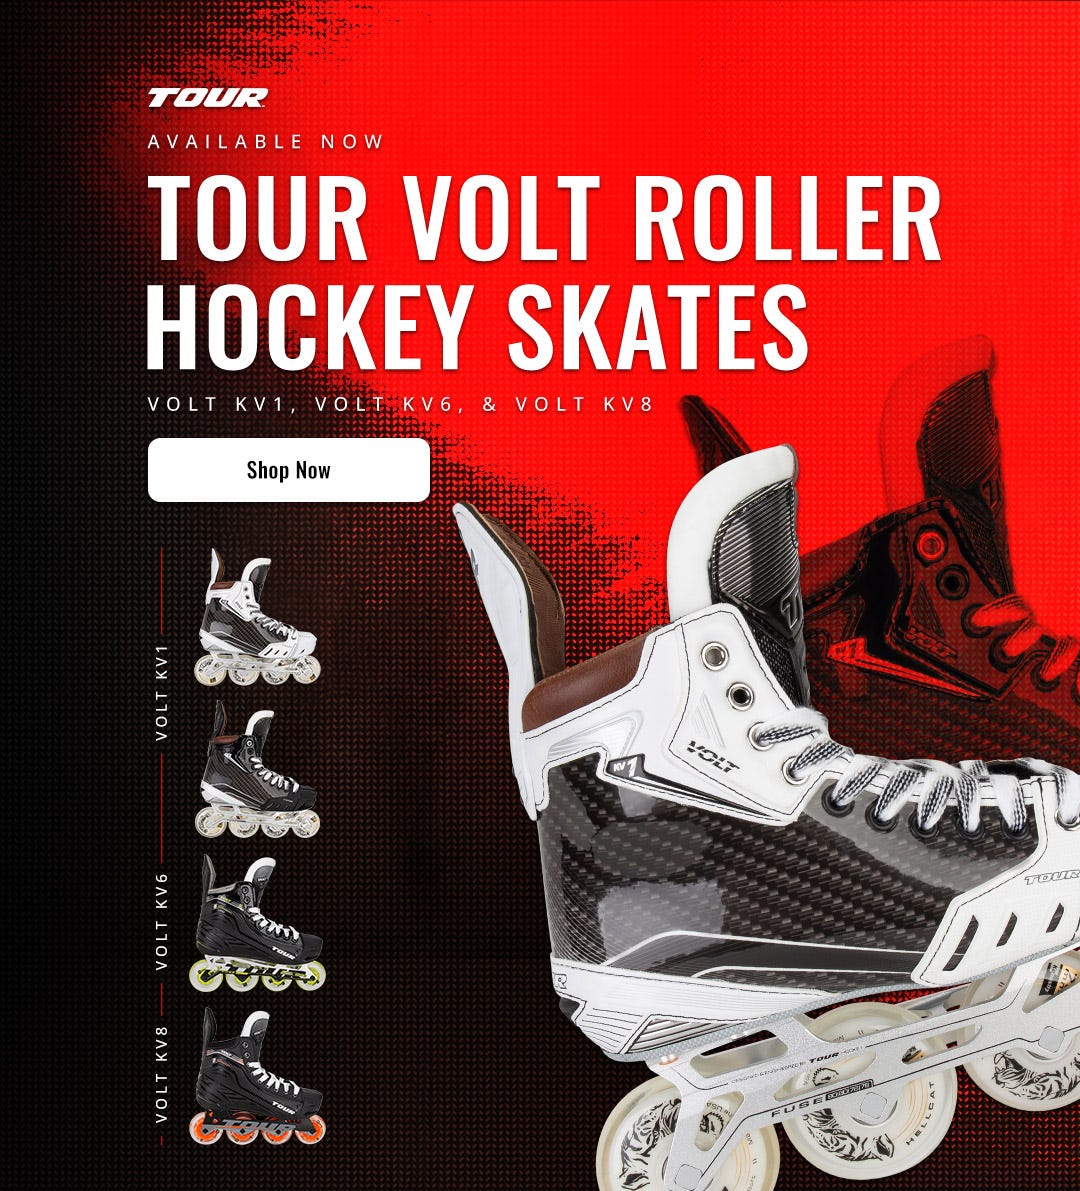 Tour Volt Roller Hockey Skates